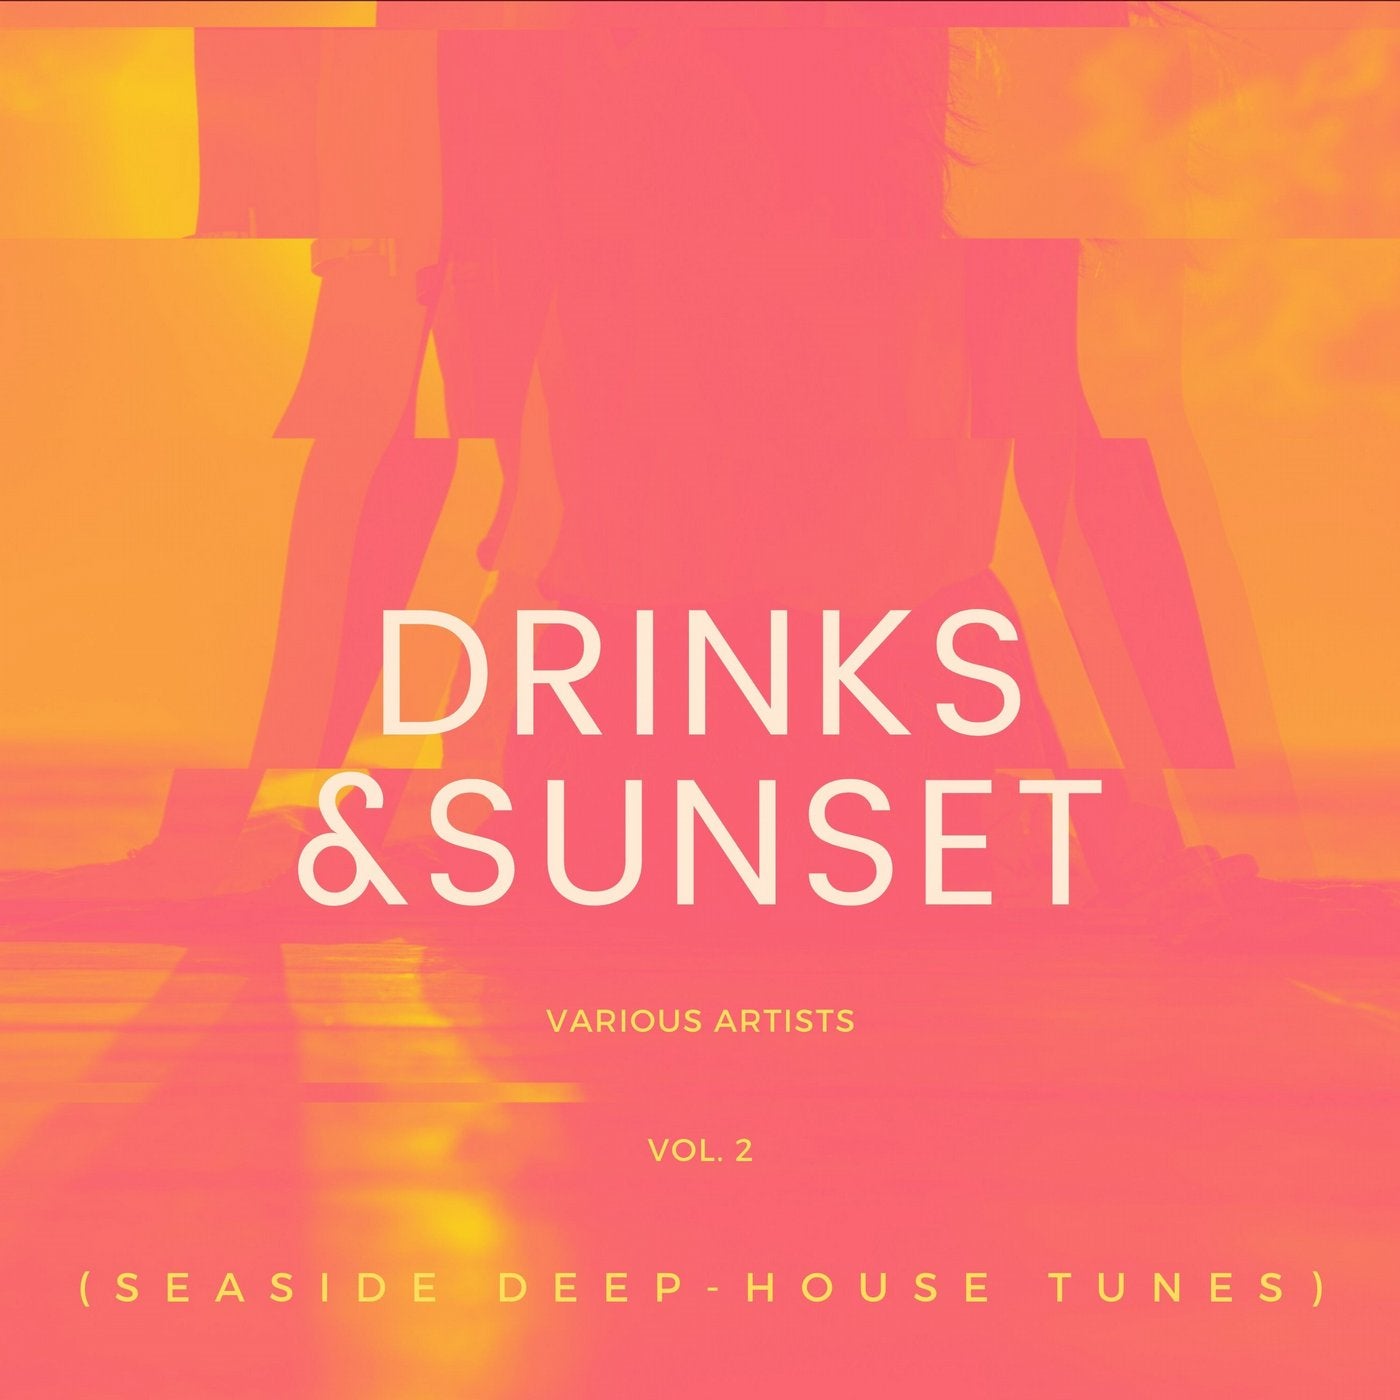 Drinks & Sunset (Seaside Deep-House Tunes), Vol. 2